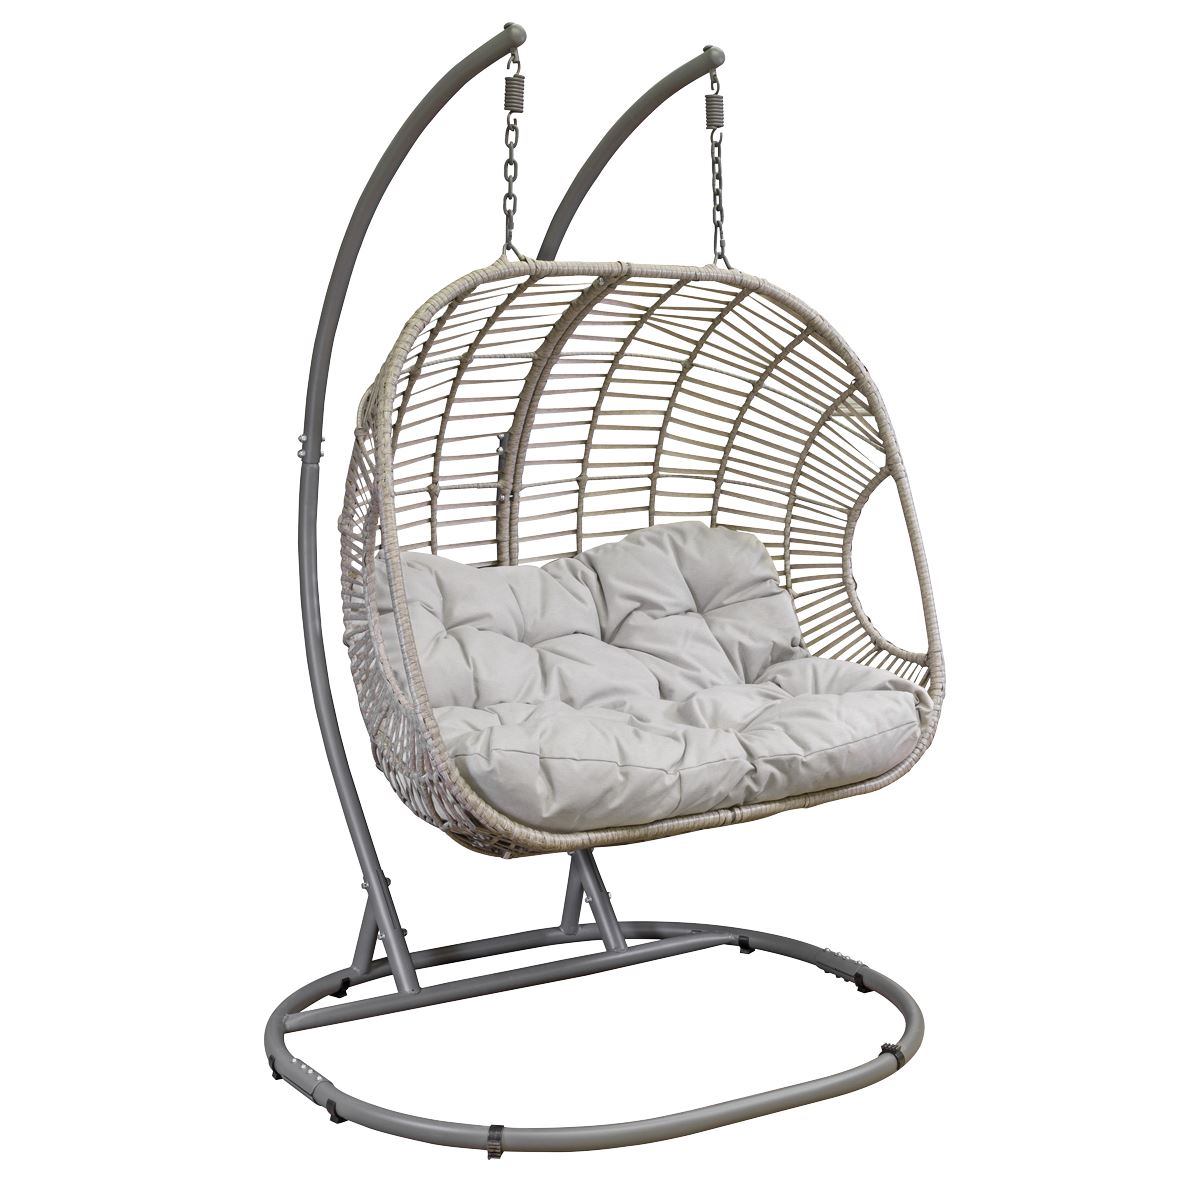 Dellonda Egg Hanging Swing Chair, Wicker Rattan Basket, Steel Frame, Double